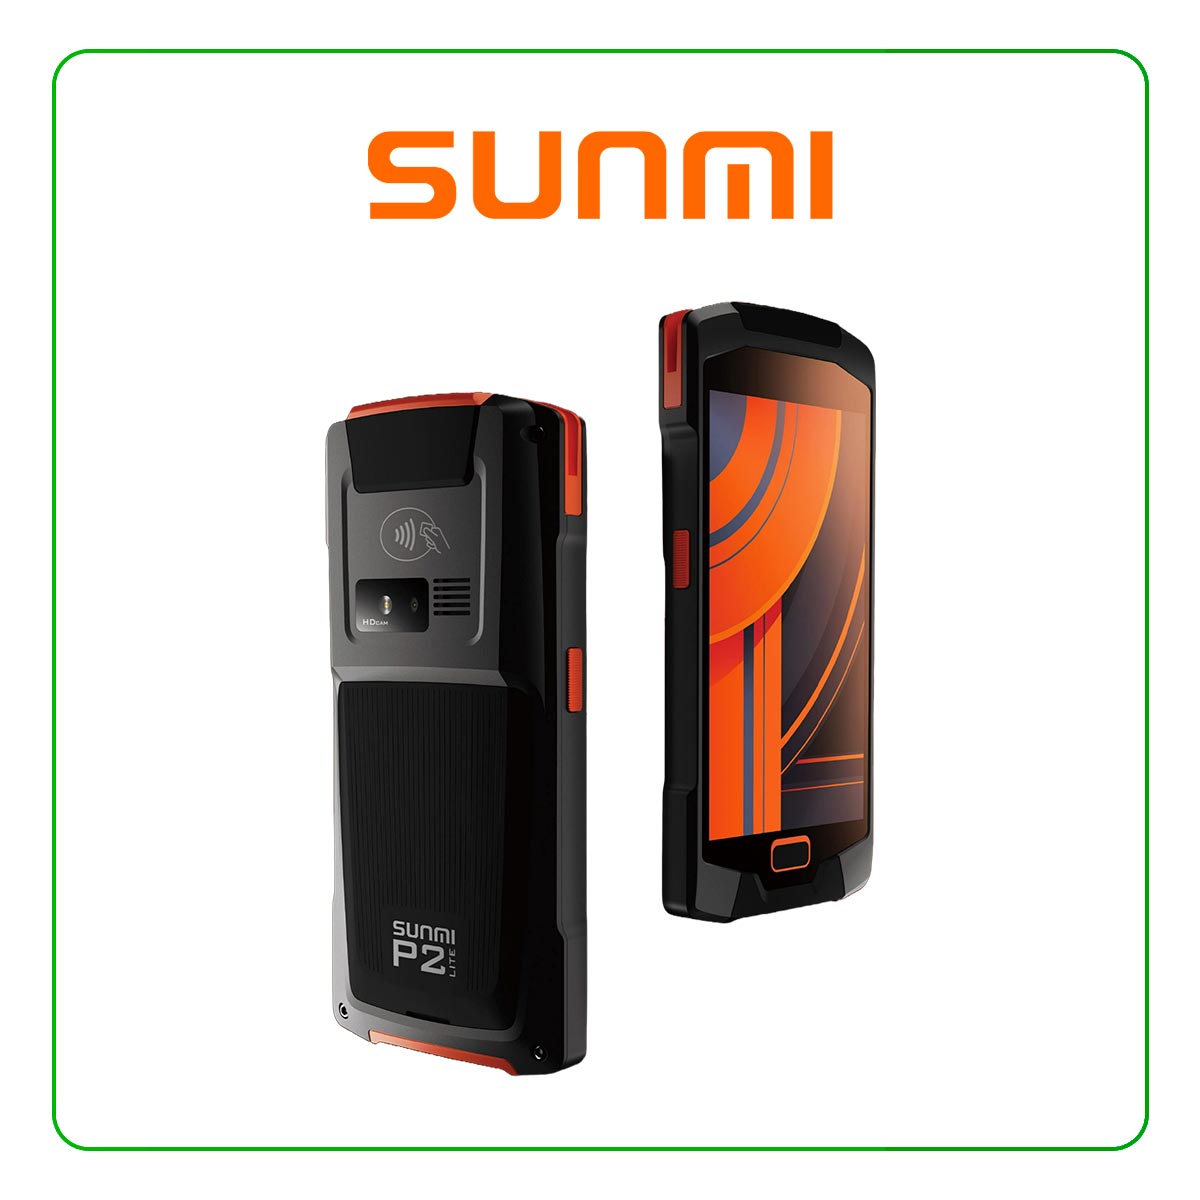 SUNMI P2 LITE TERMINAL DE PAGOS PORTÁTIL / NFC / CARD PAYMENT / ANDROID 7.1 / PANTALLA 5″ HD / 1GB RAM + 8GB ROM / CAMERA 5.00 MP / SIM CARD/ WIFI